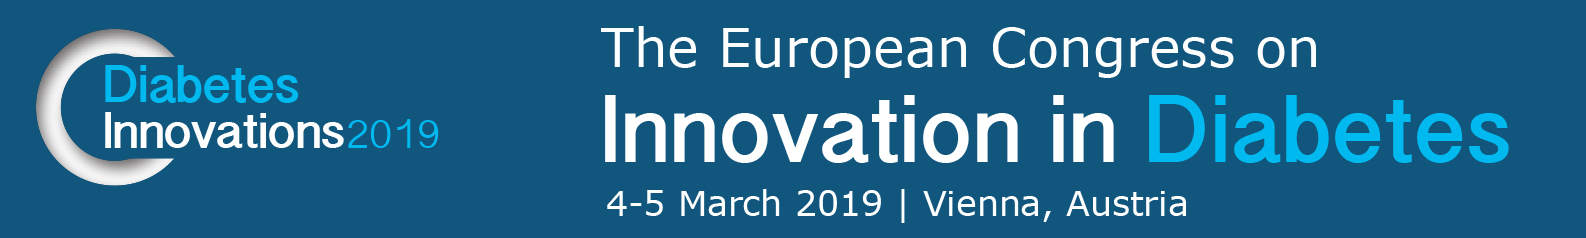 The European Congress on Innovation in Diabetes (Diabetes-Innovations2019) 